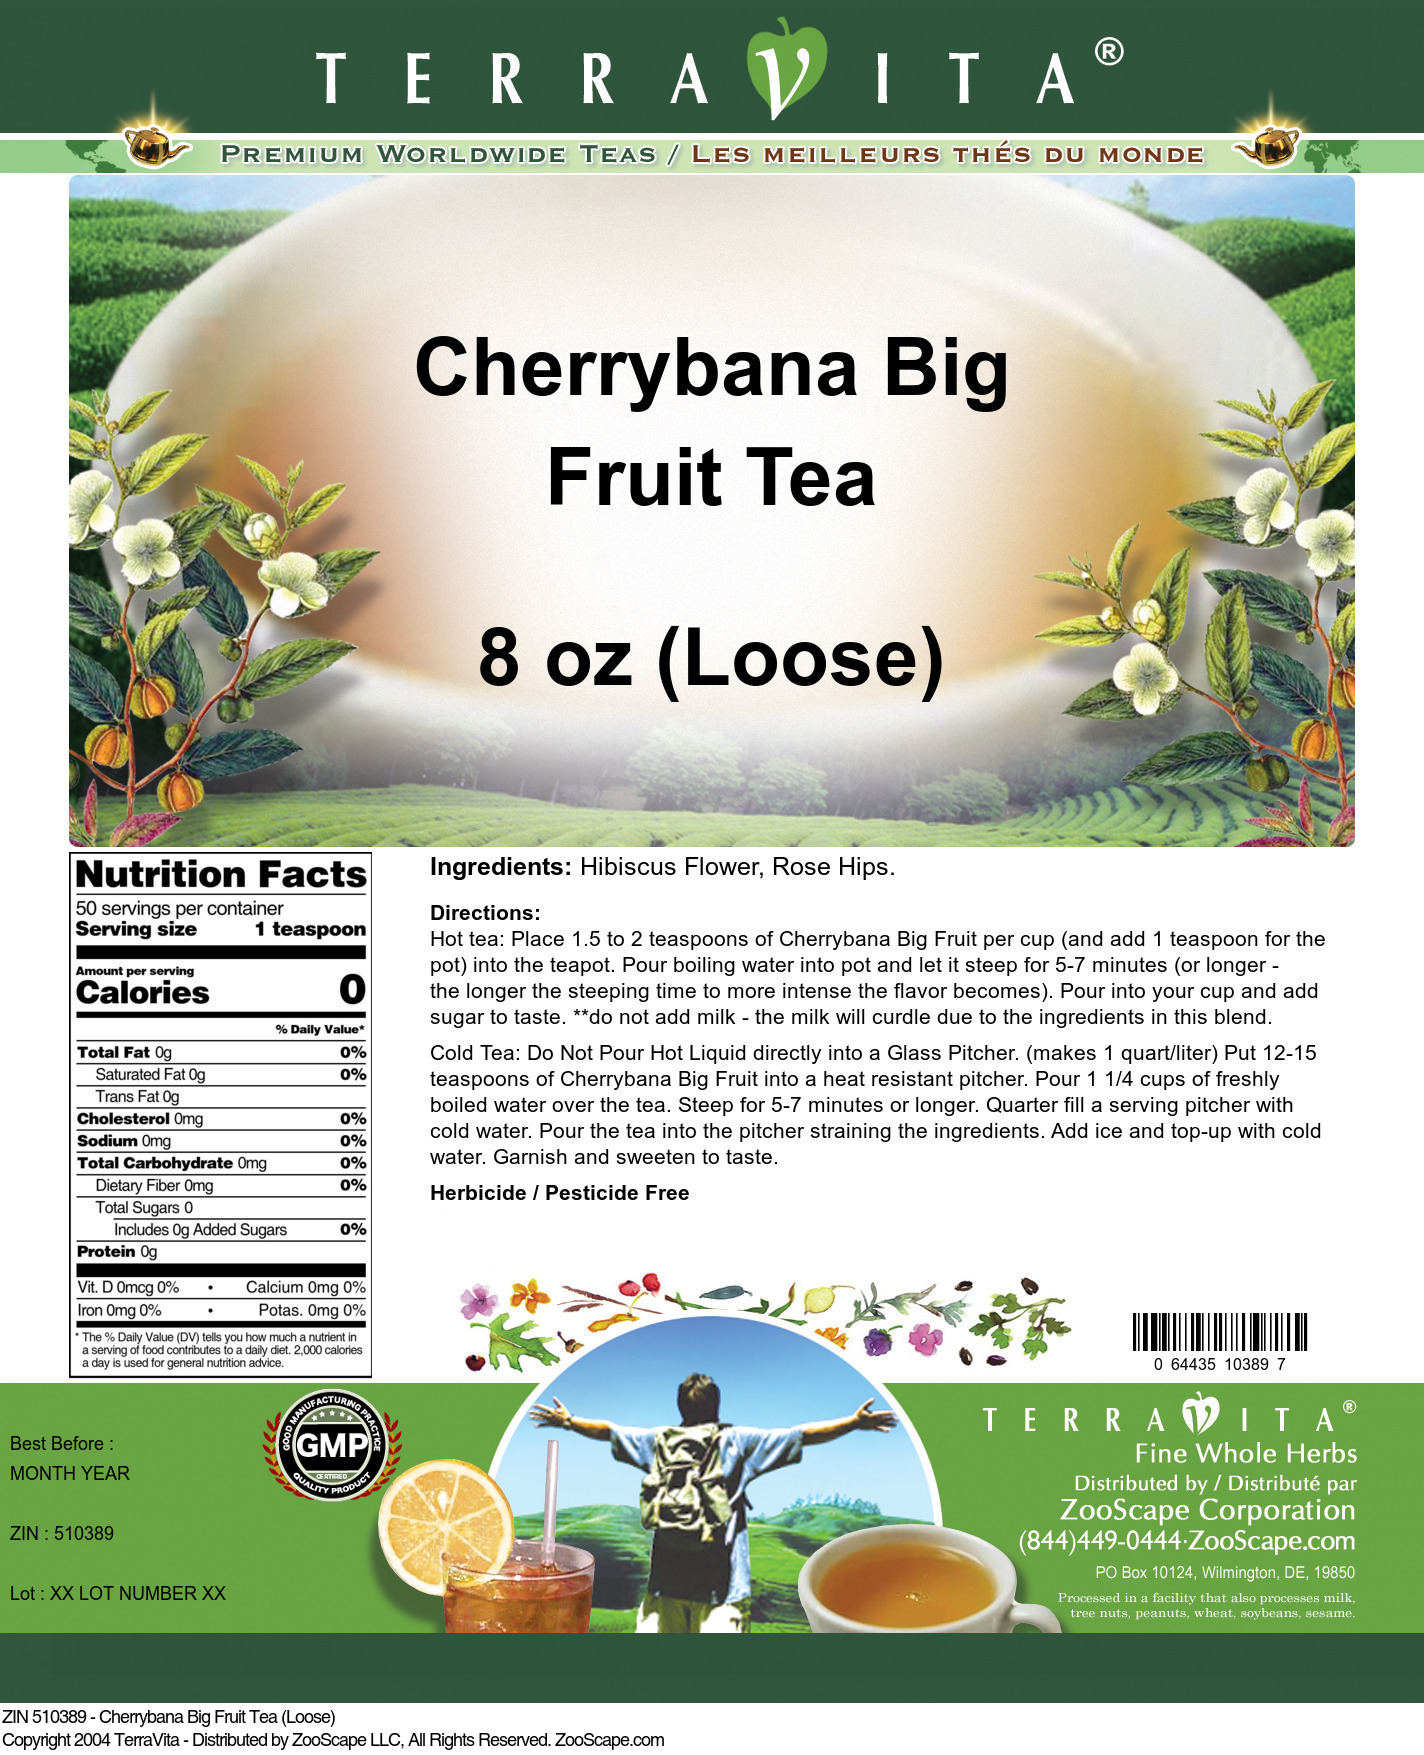 Cherrybana Big Fruit Tea (Loose) - Label